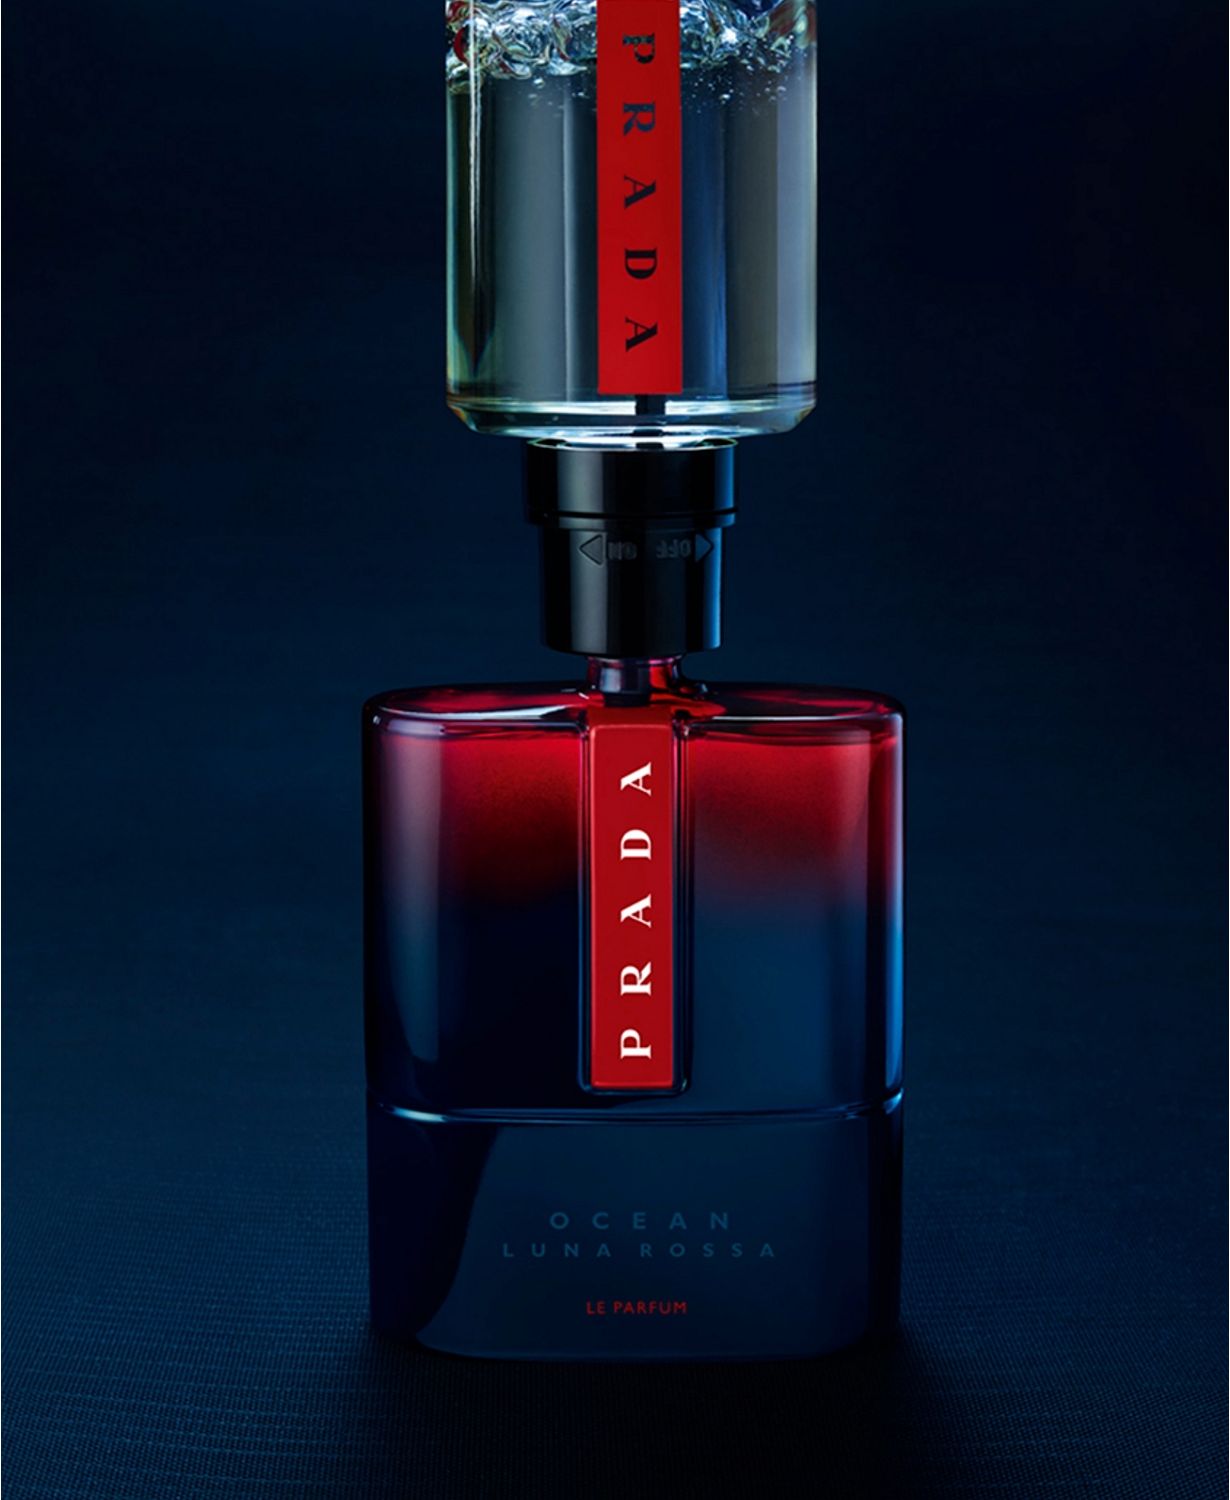 Men's Luna Rossa Ocean Le Parfum Spray, 3.3 oz.